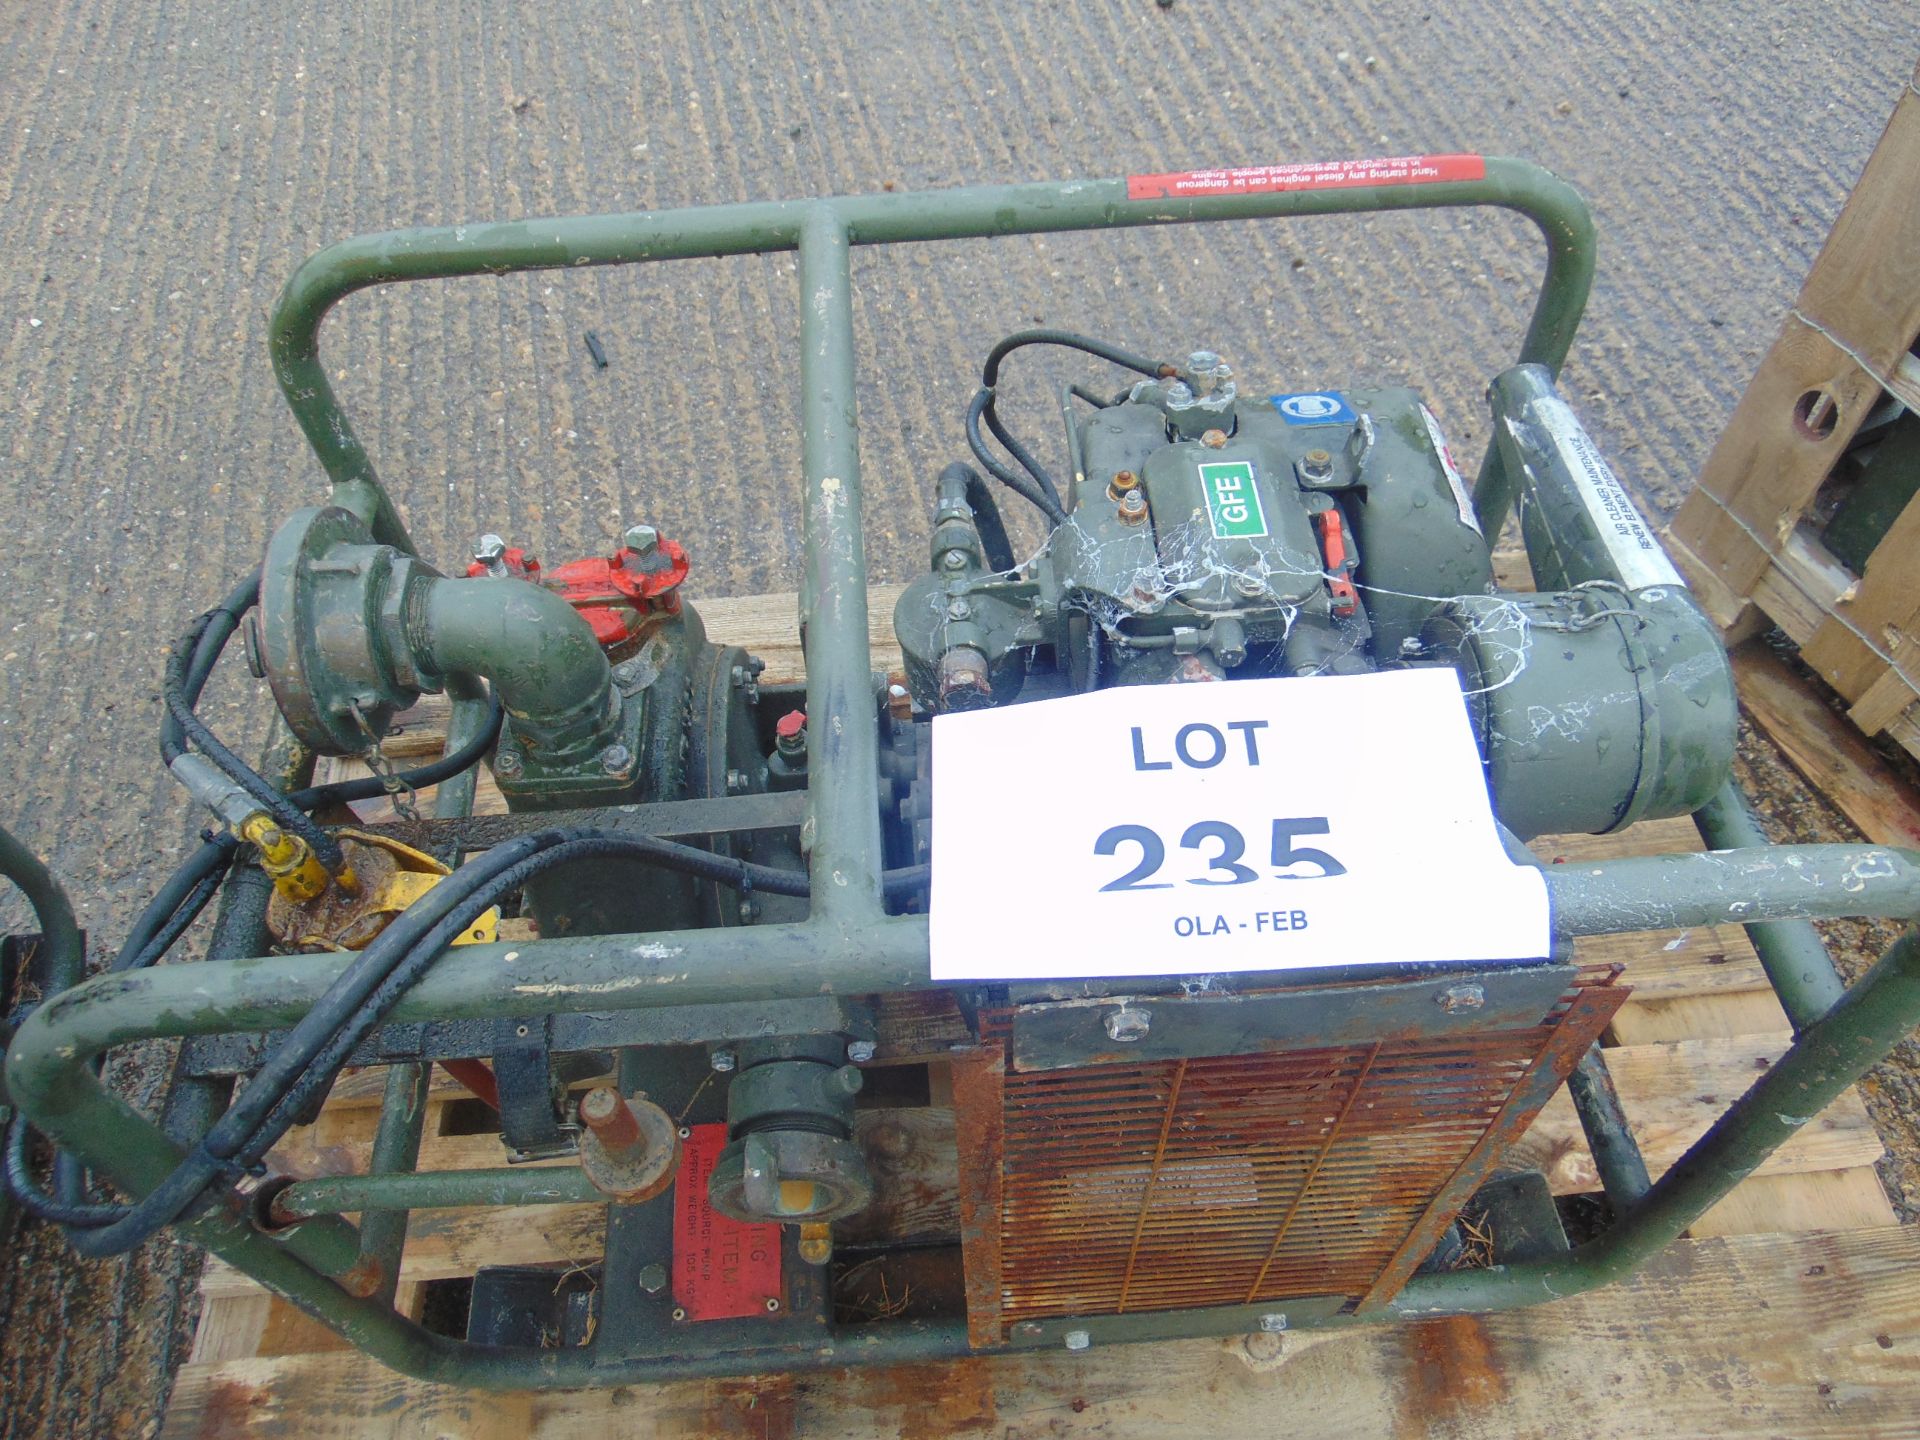 Lister Diesel Gilks water Pump from MoD, as shown